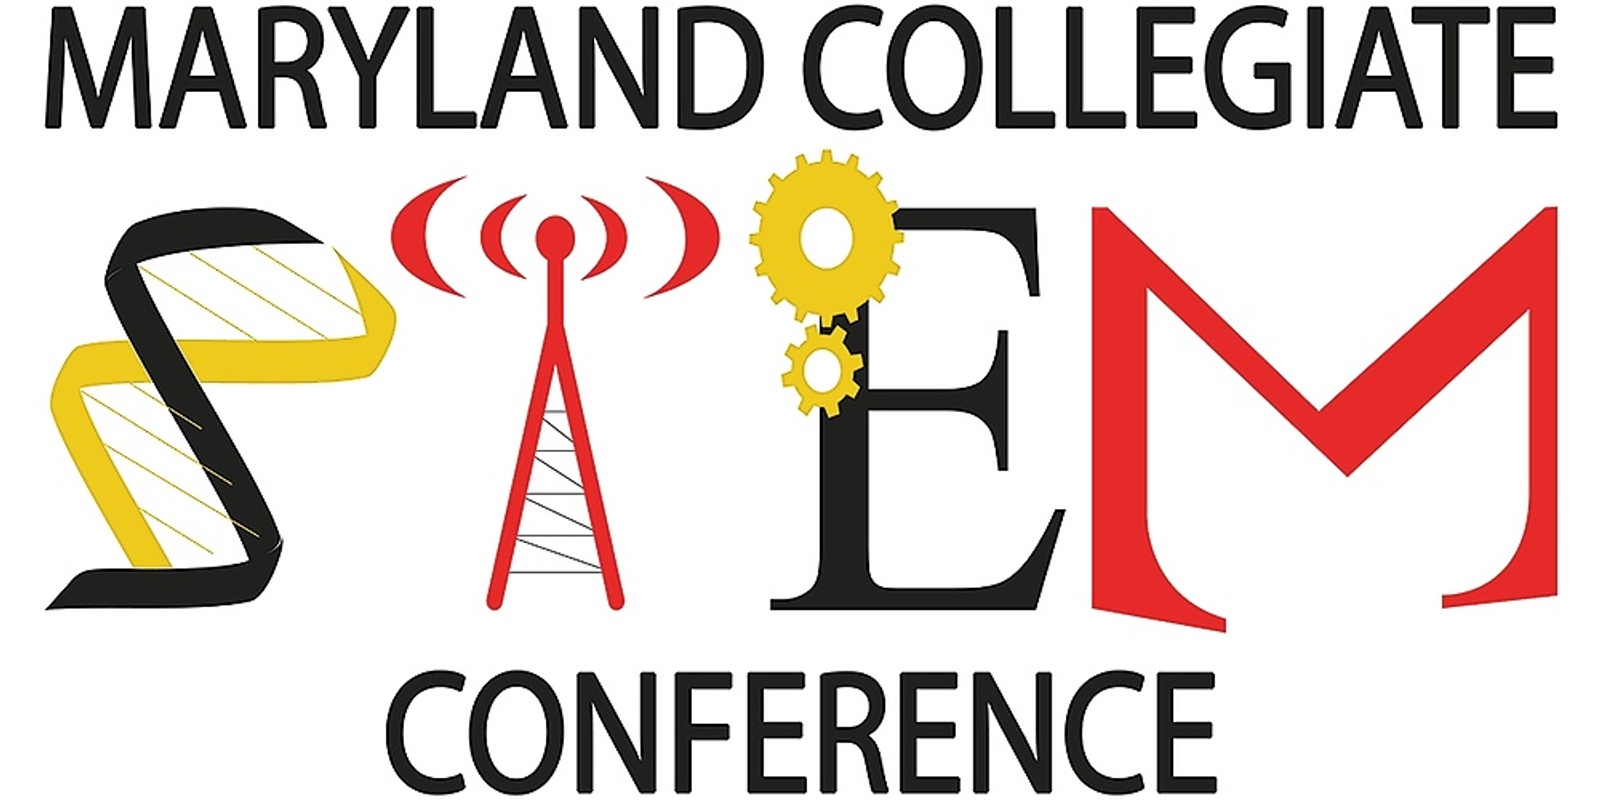 Banner image for Maryland Collegiate STEM Conference